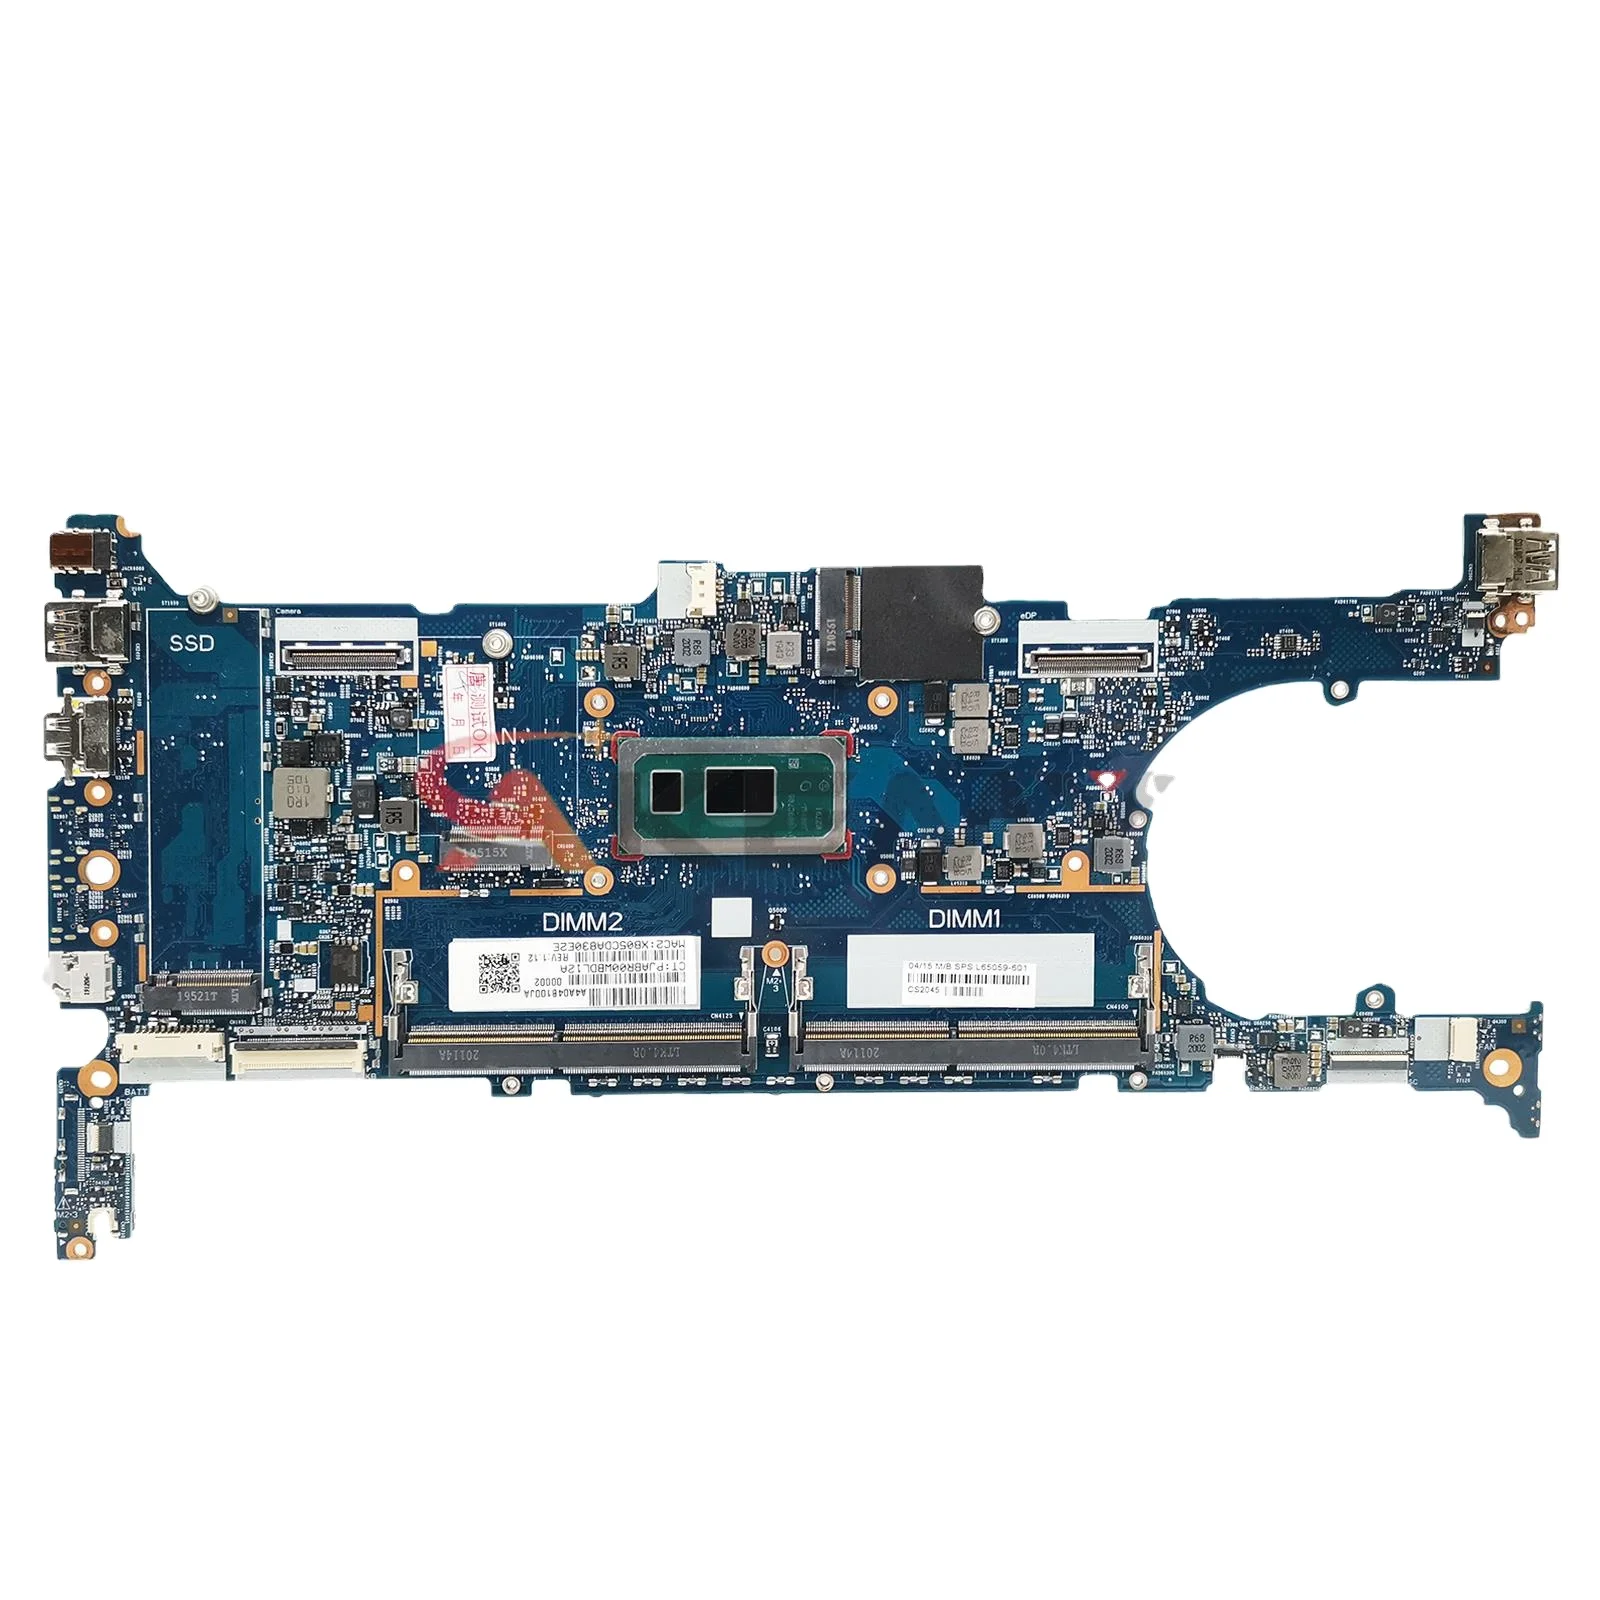 

For HP EliteBook X360 830 G6 Laptop motherboard Mainboard 6050A3059101 Motherboard with I5-8265U I5-8365U I7-8565U I7-8665U CPU